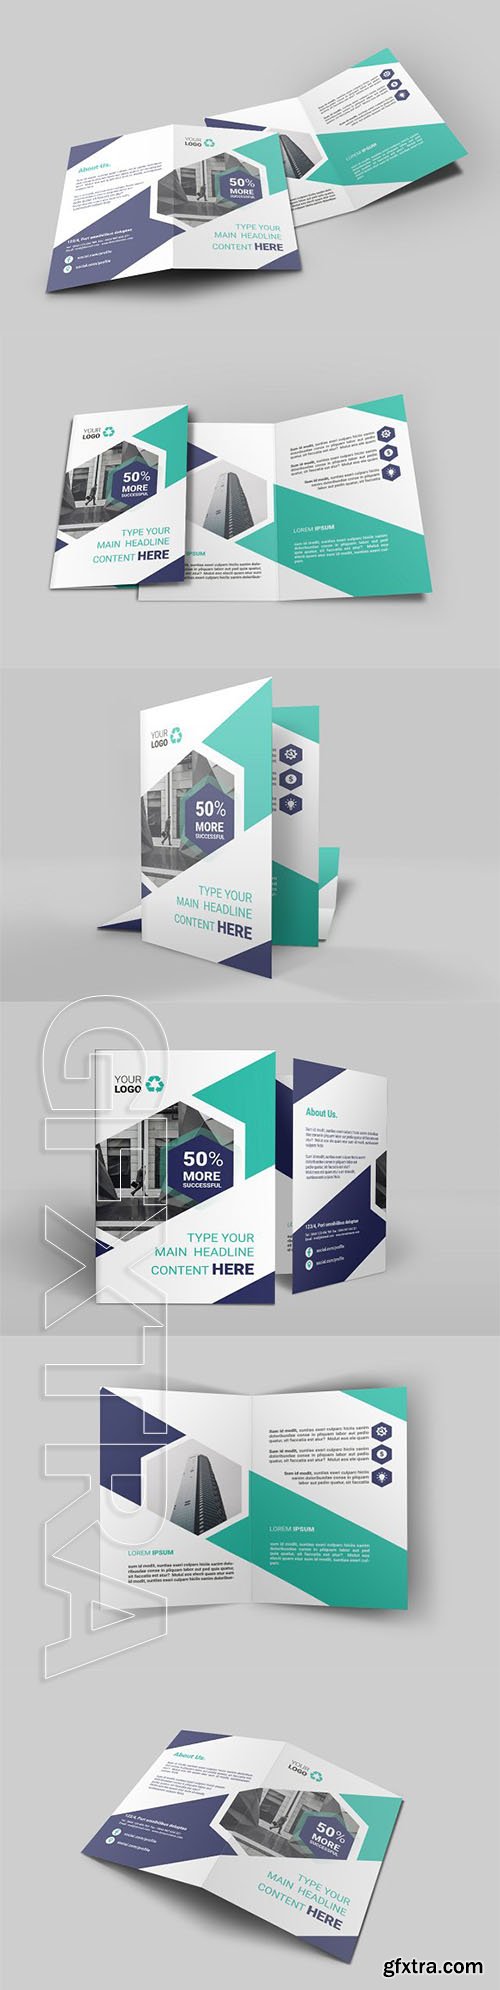 CreativeMarket - Corporate Bi Fold Brochure 2002737